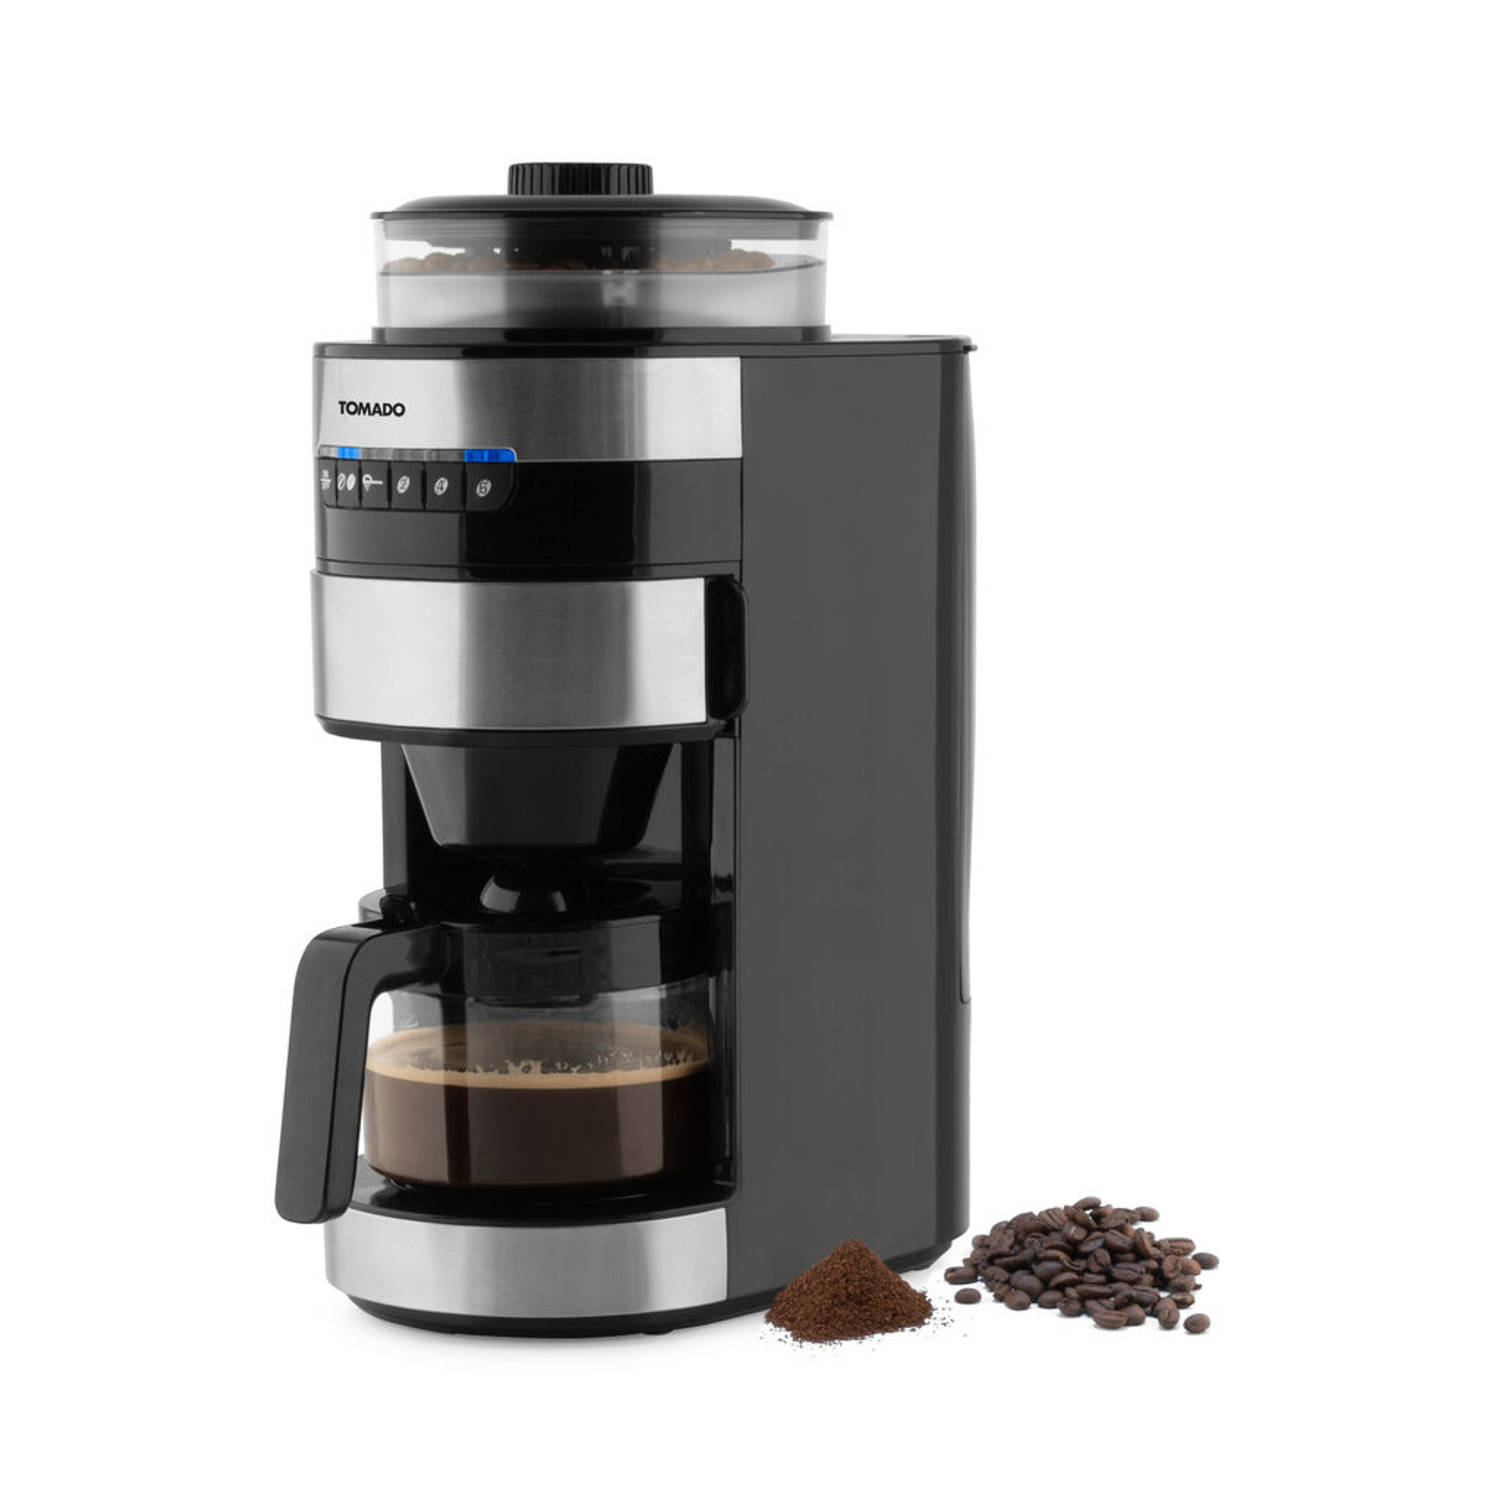 Tomado Tgb0801s Grind & Brew Koffiezetapparaat Filterkoffie Koffiebonen 0.75 L Inhoud Rvs-zwart